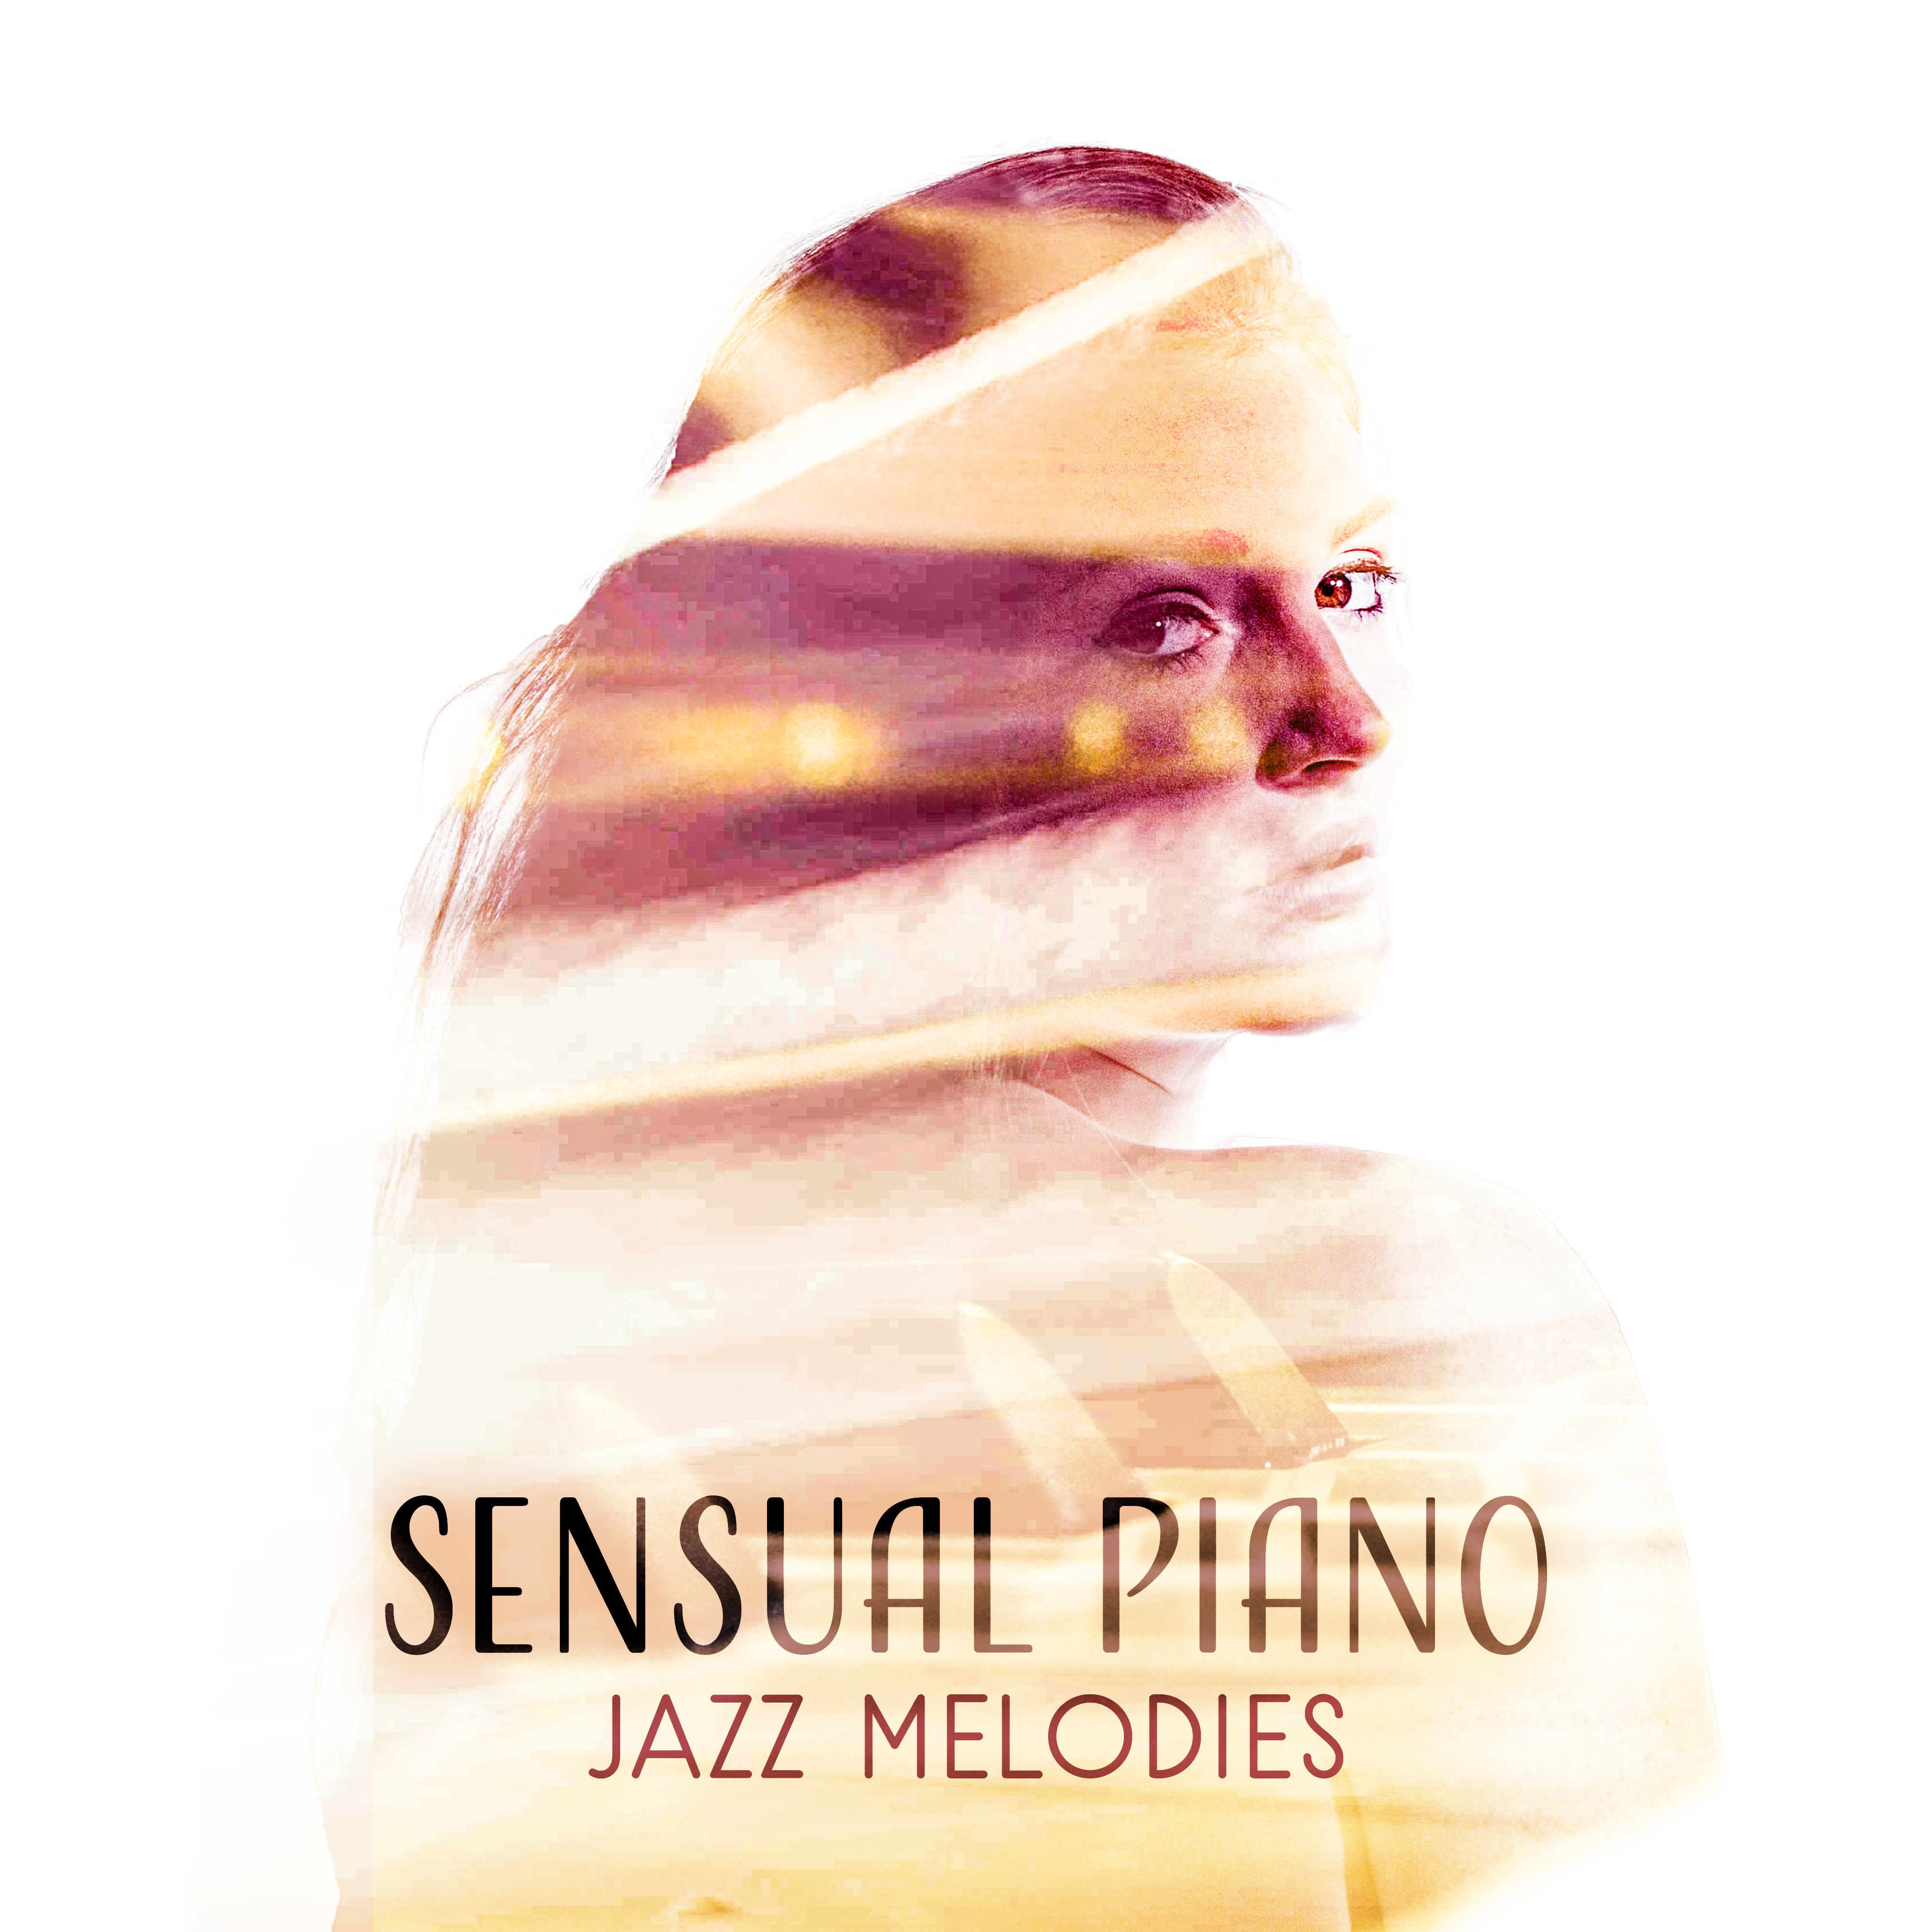 Sensual Piano Jazz Melodies  Romantic Background Jazz, Music to Fall in Love,  Jazz Music